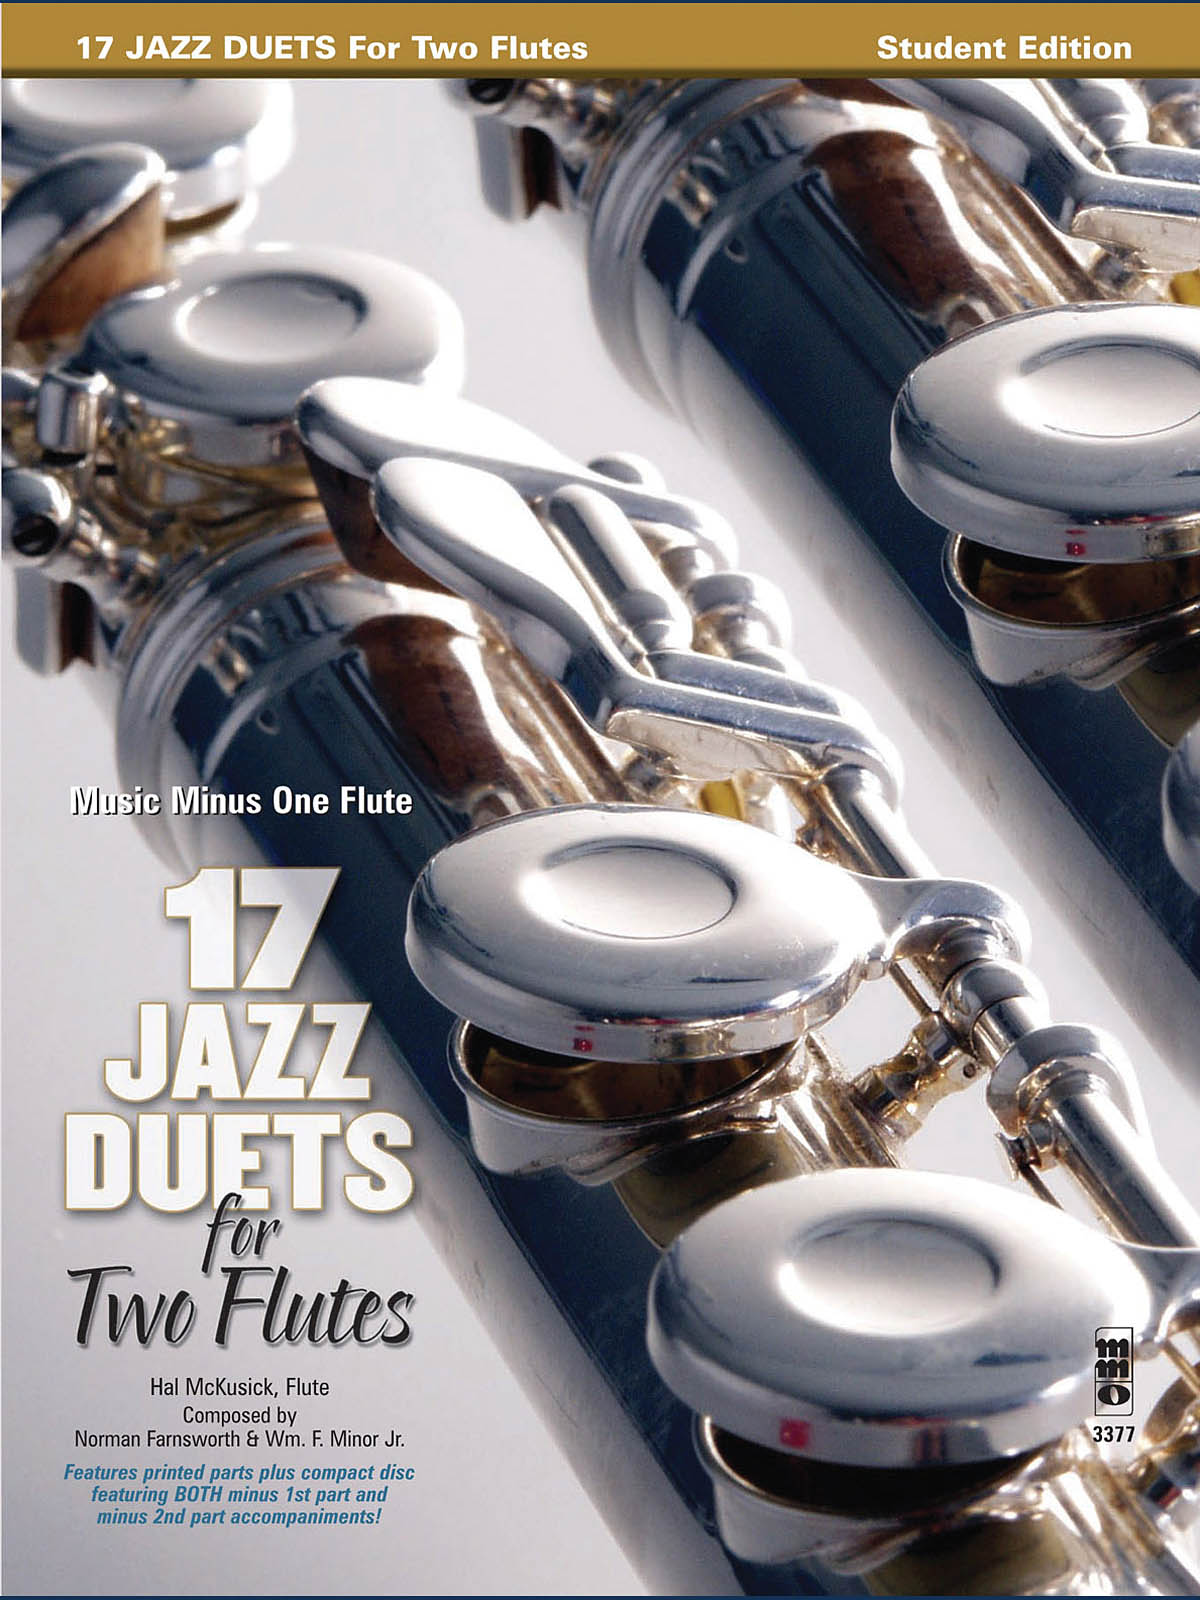 @Jazz Duets. Music Minus maker. 2 flutes